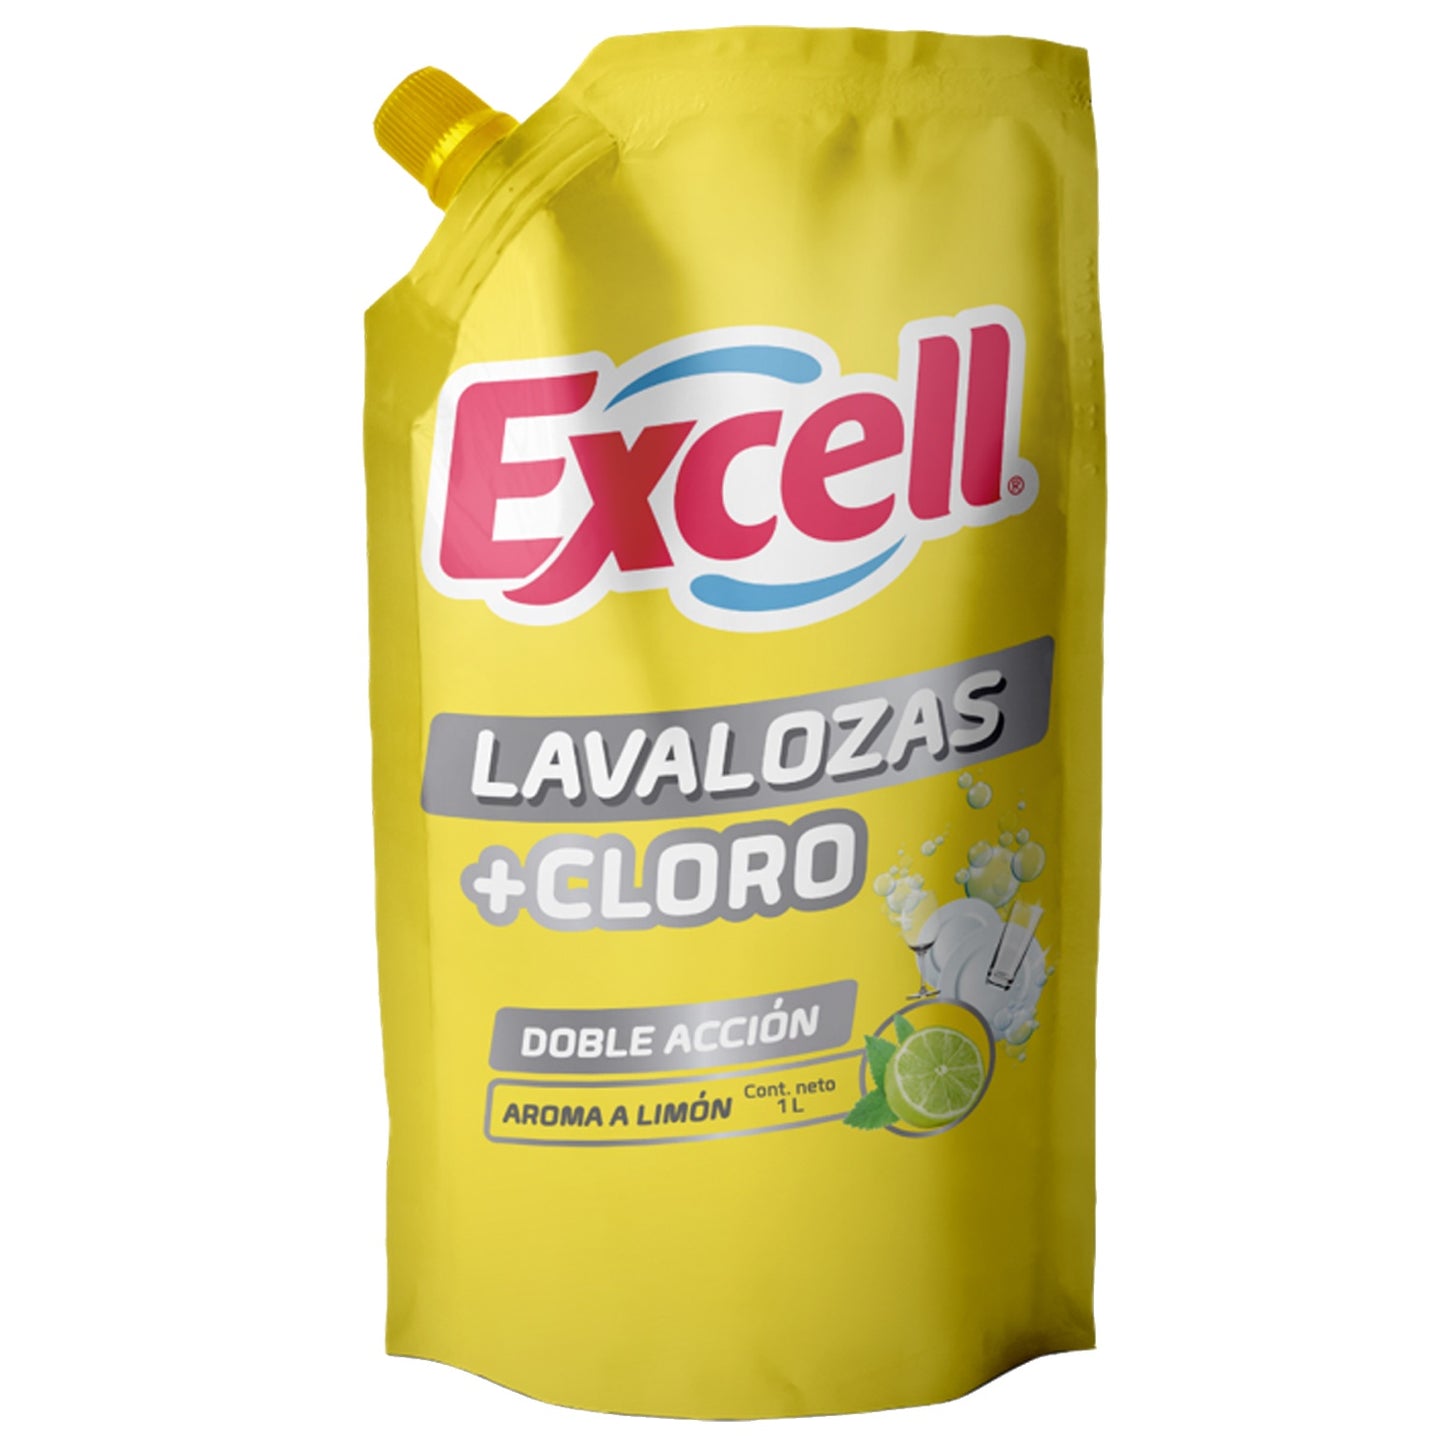 Lavalozas con Cloro Excell Doypack 1 litro